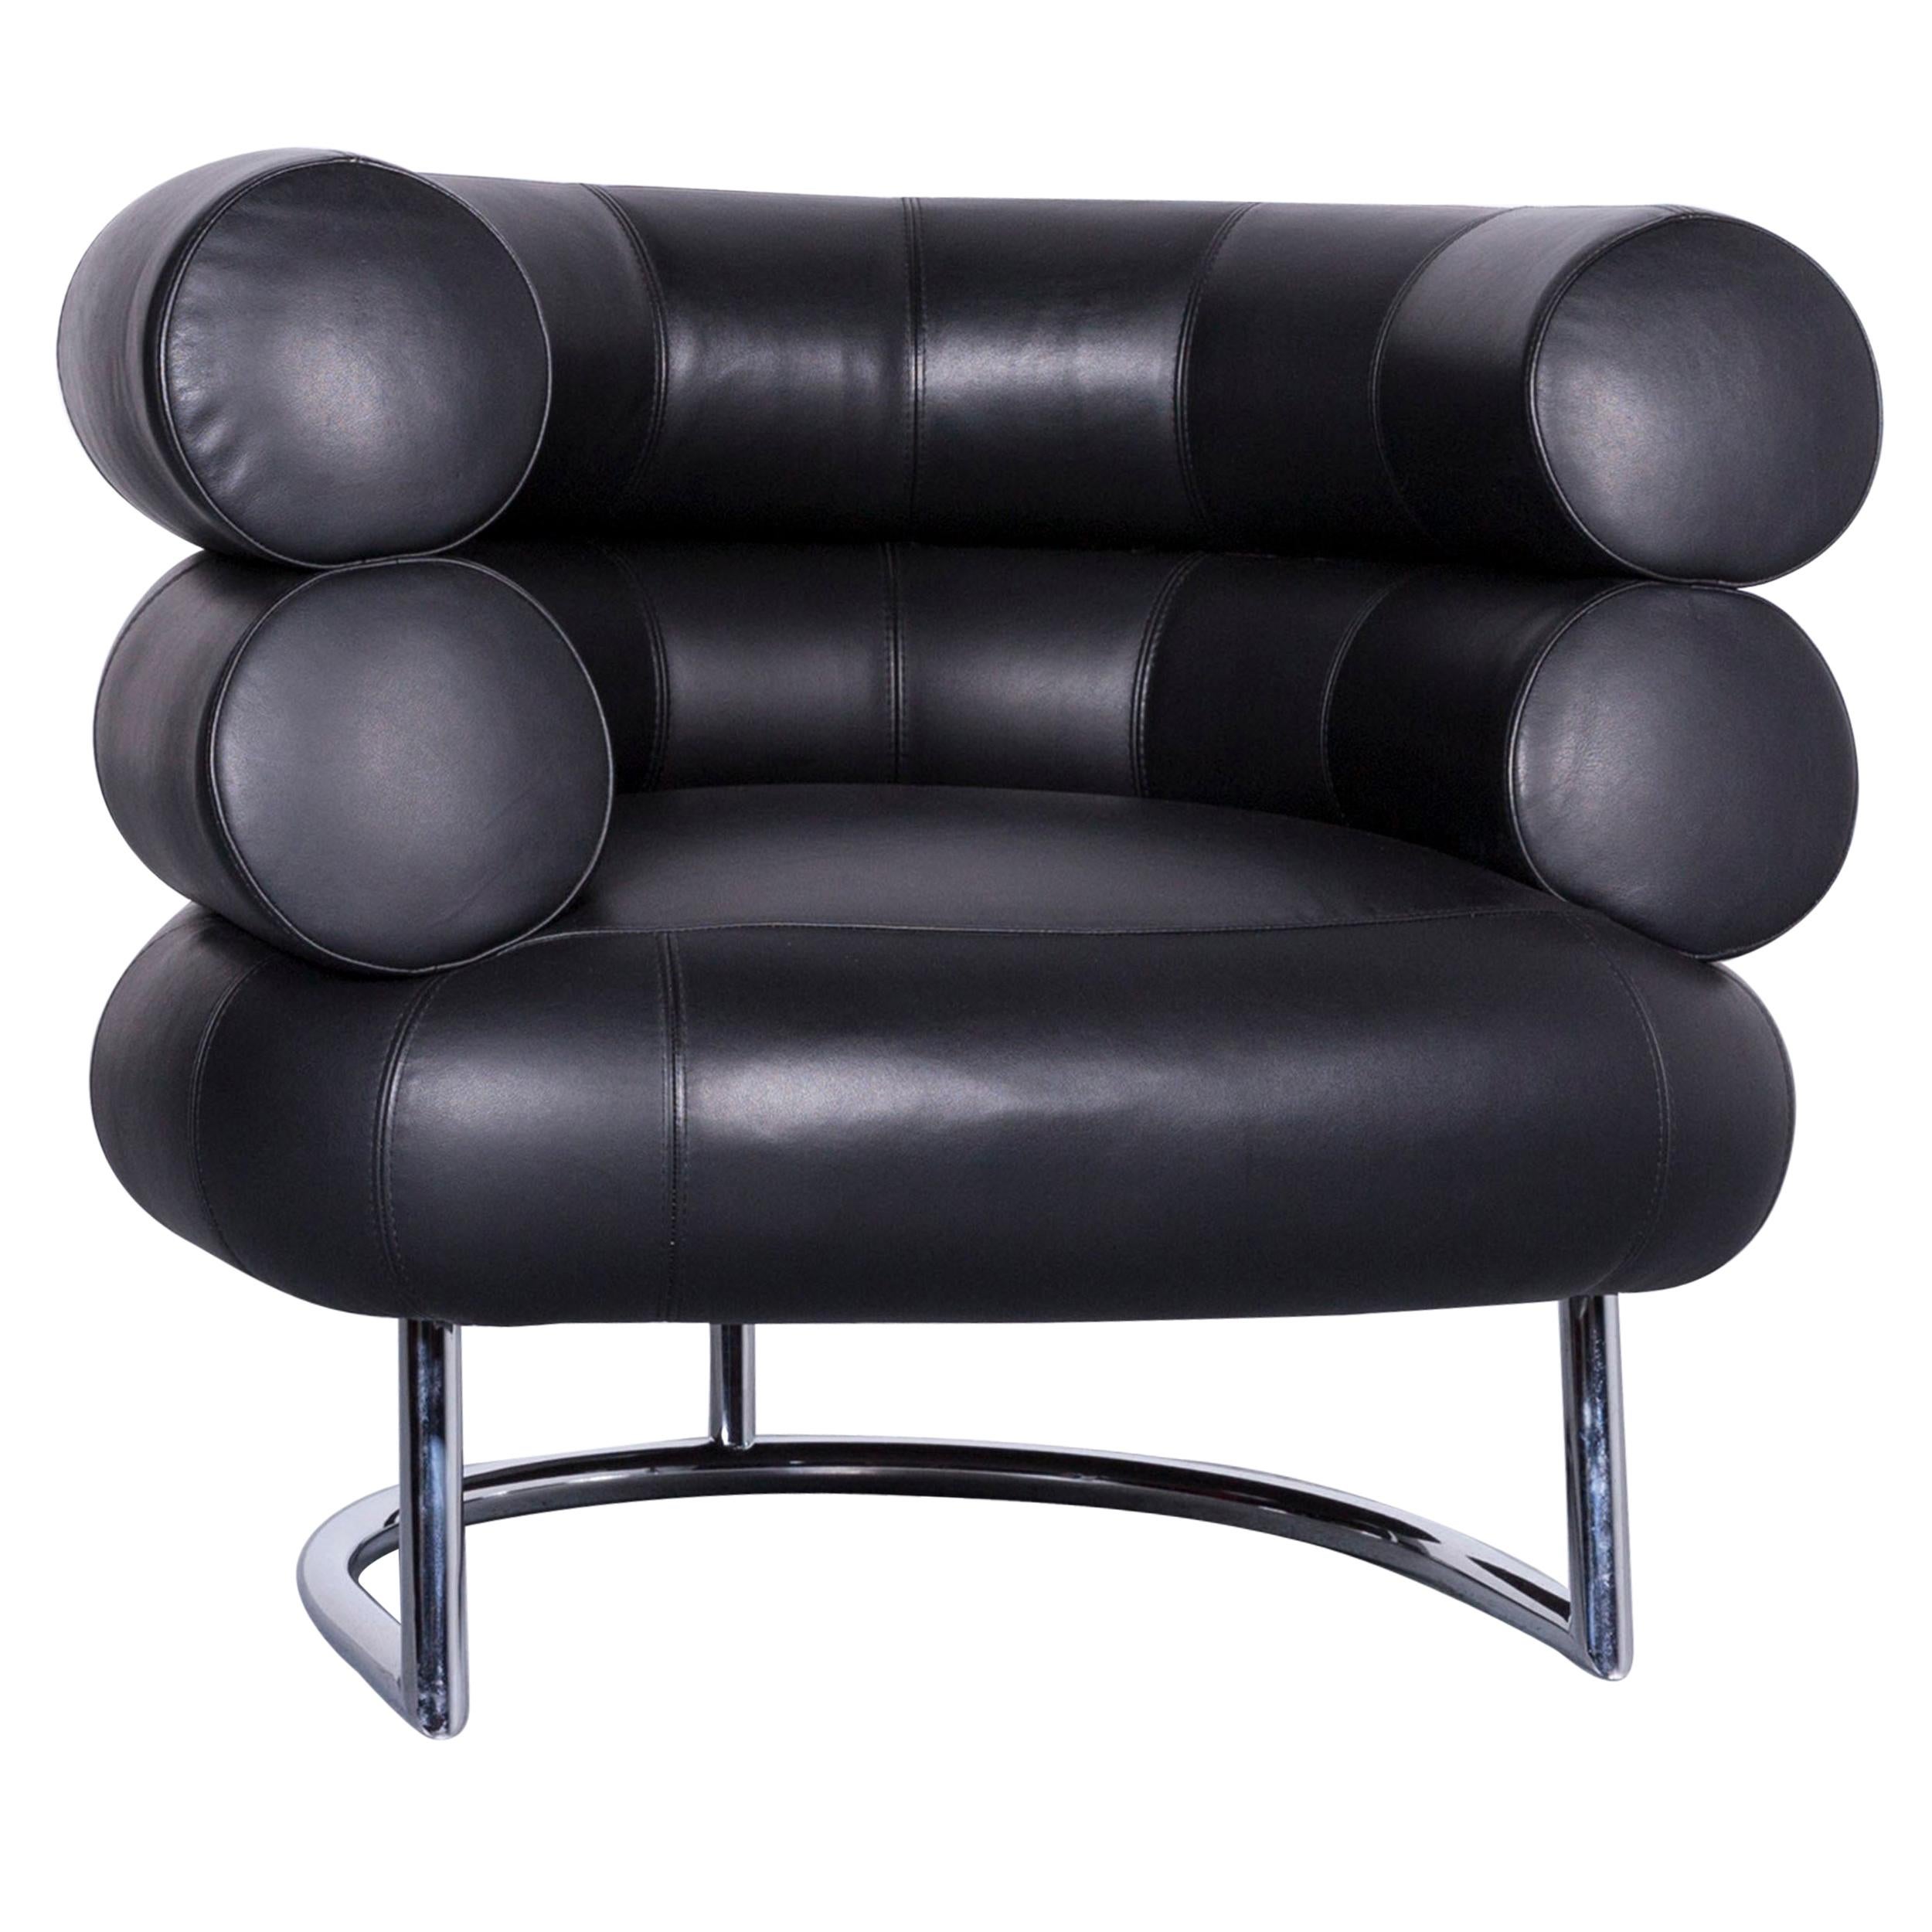 ClassiCon Bibendum Chair Designer Leather Armchair Black Genuine Leather Chair For Sale